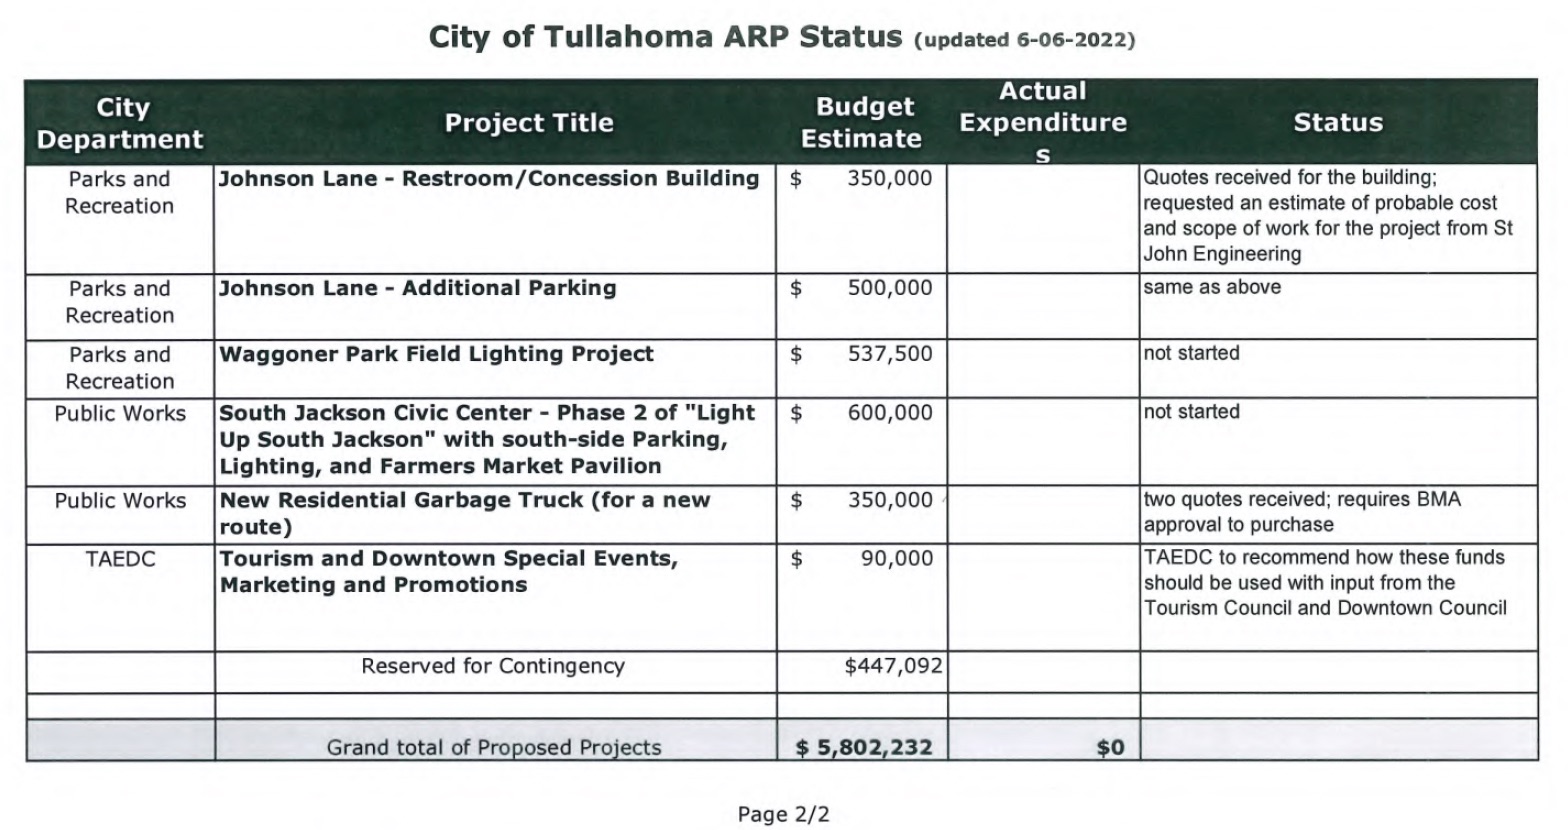 City of Tullahoma ARP Grant Status as of June 22, 2022